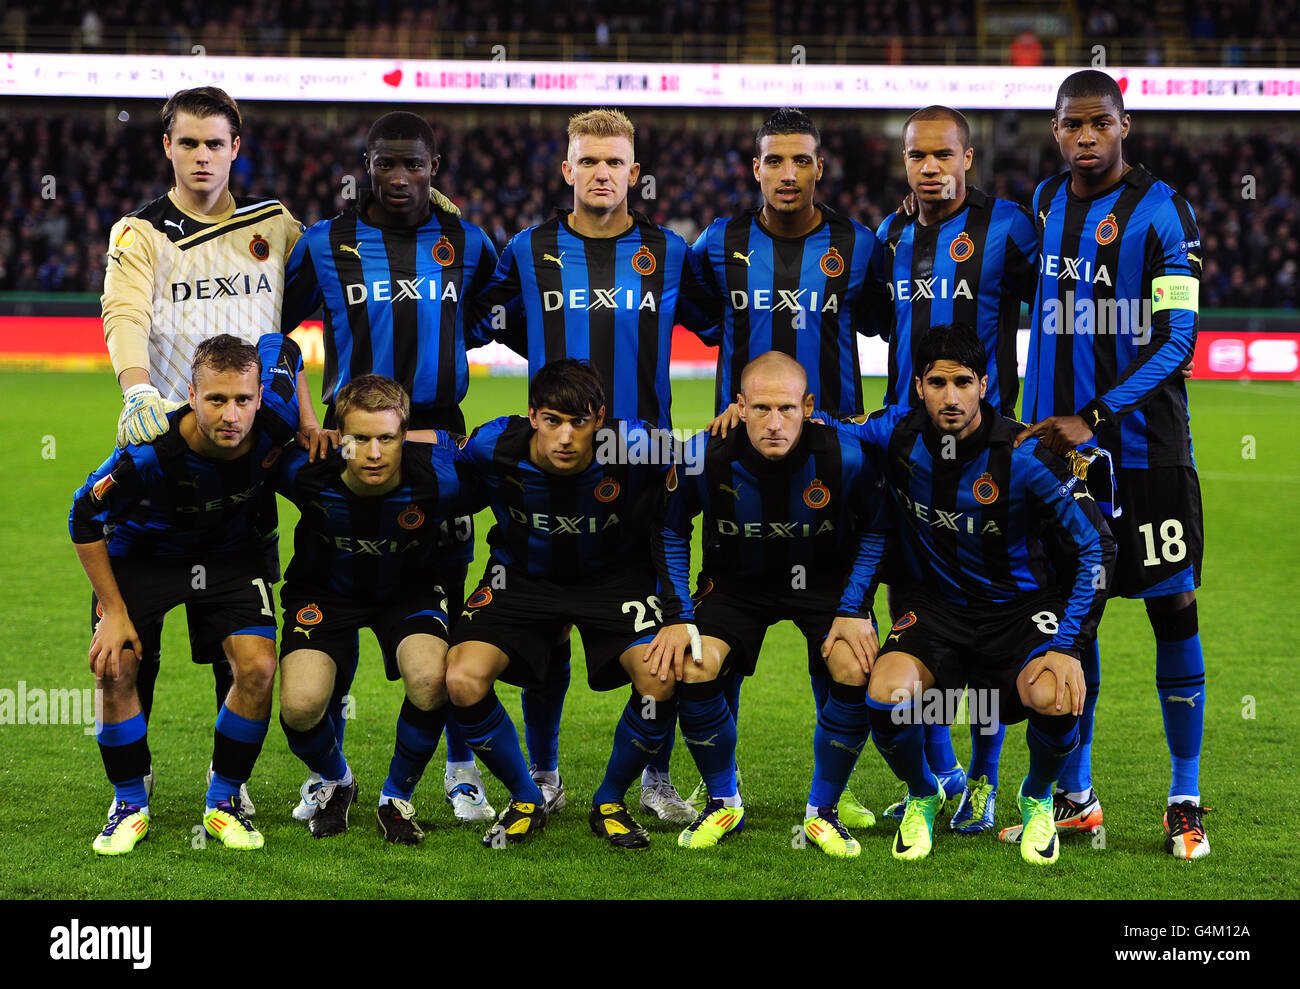 European Football - UEFA Europa League - Group H - Club Brugge KV